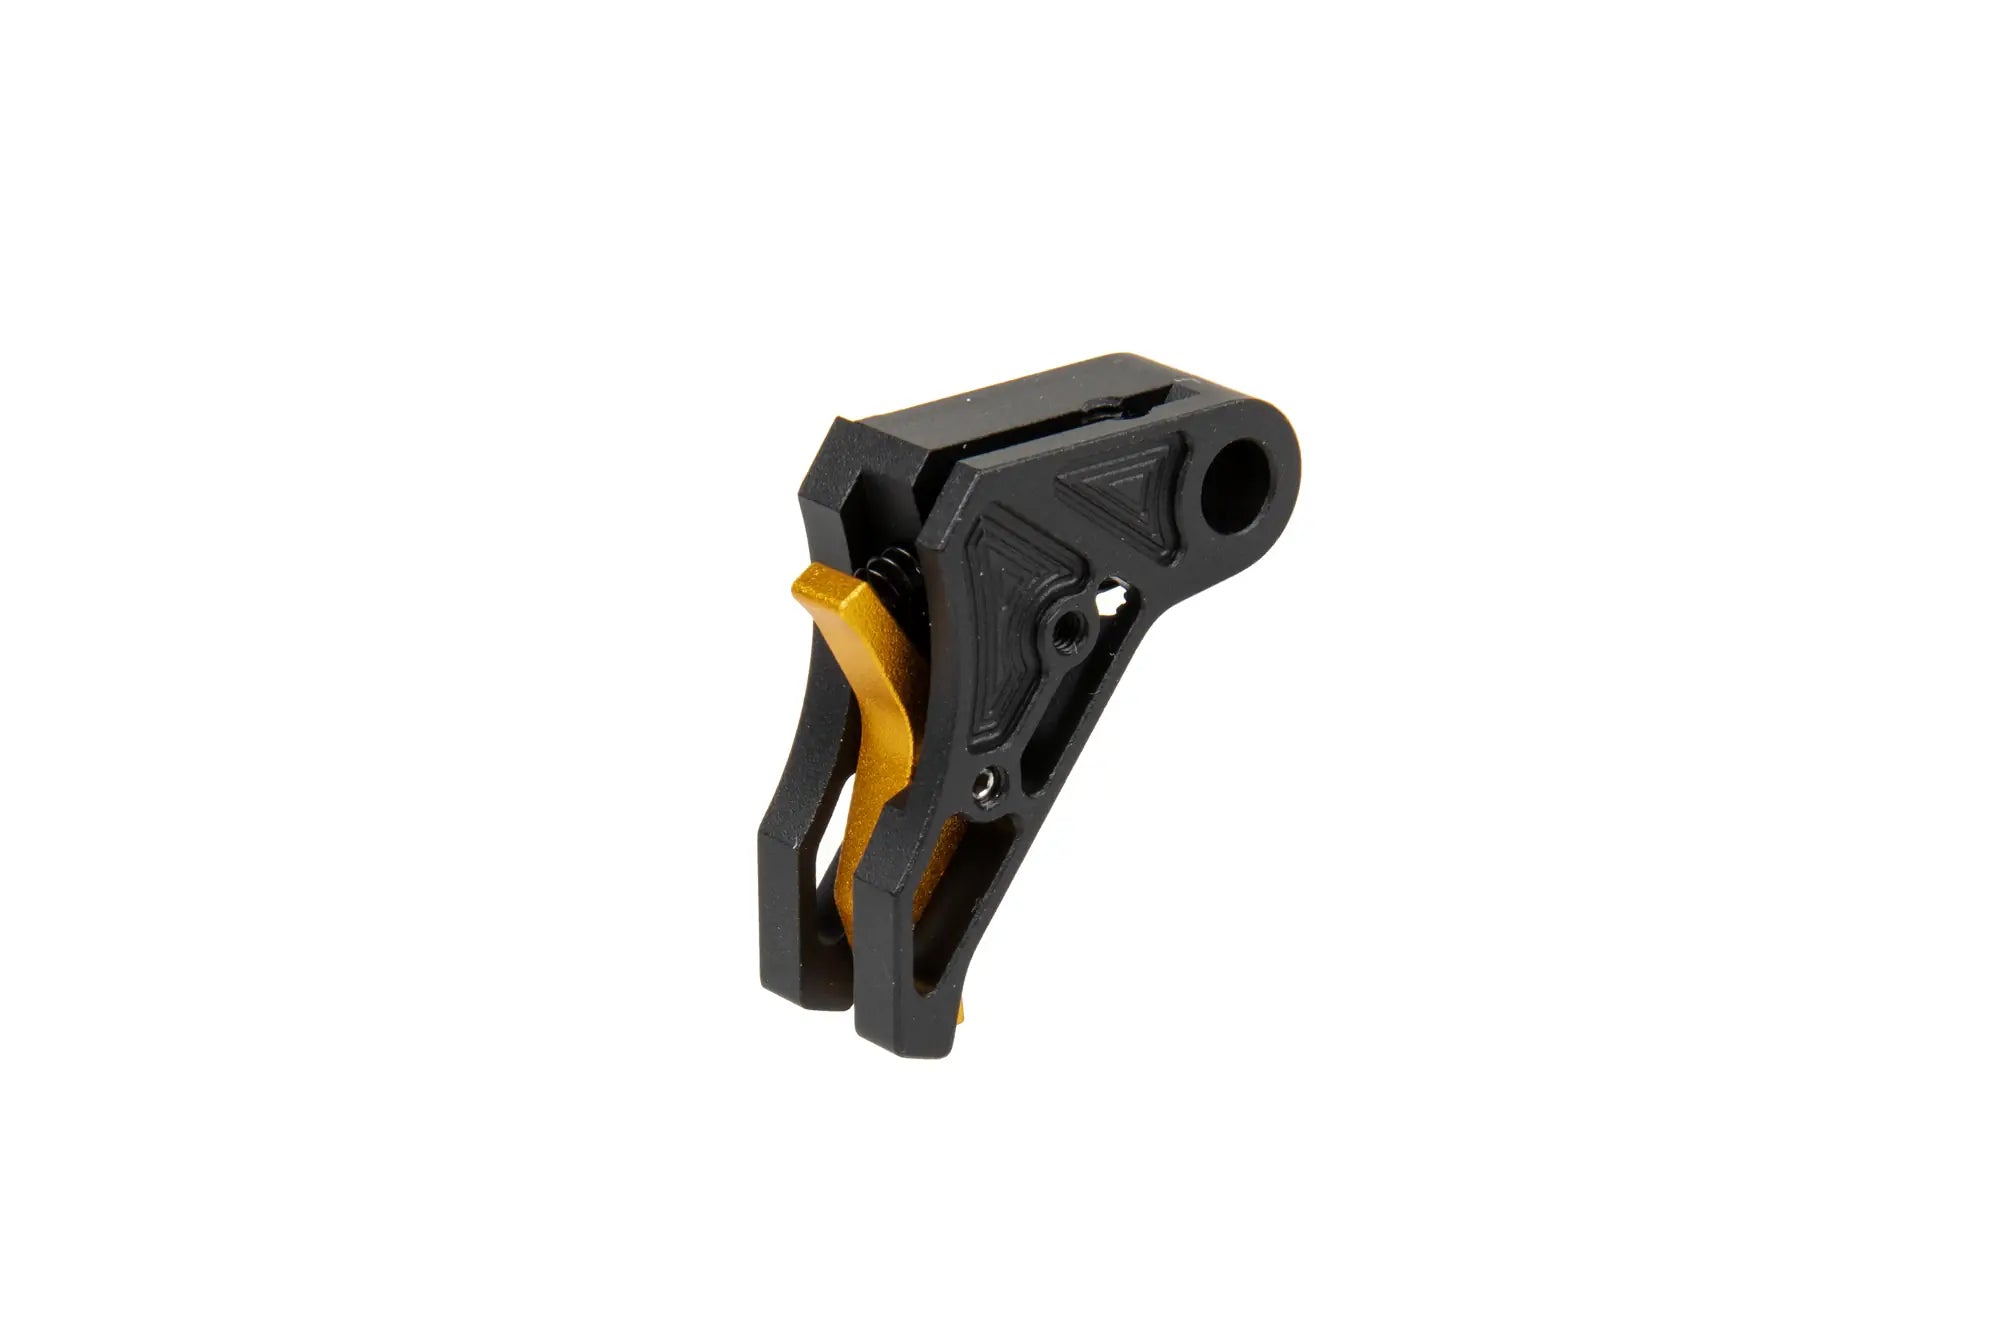 CNC aluminium trigger EX style for TM,WE G17/19/34 replicas - Black/Gold-1